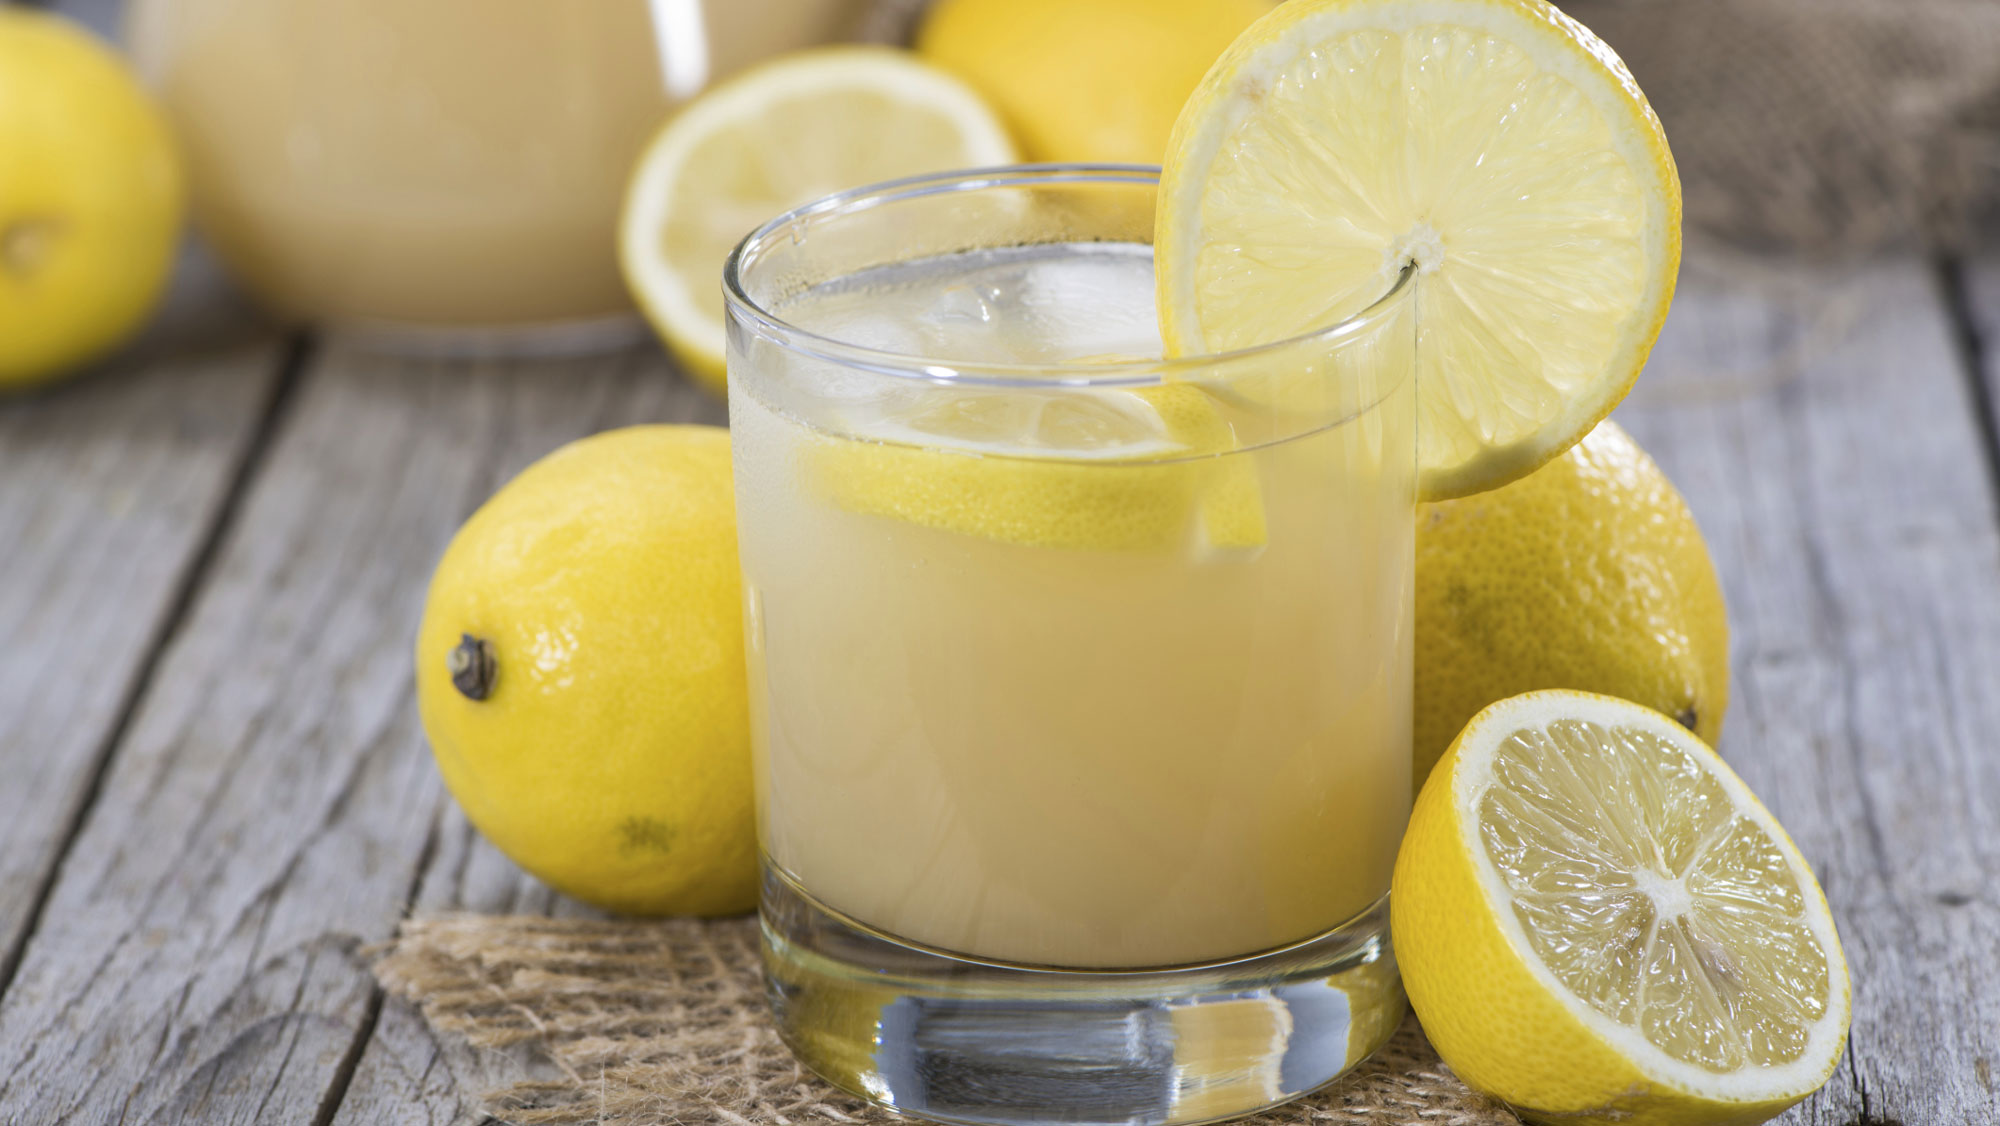 Proven health benefits of lemon juice for pregnant women